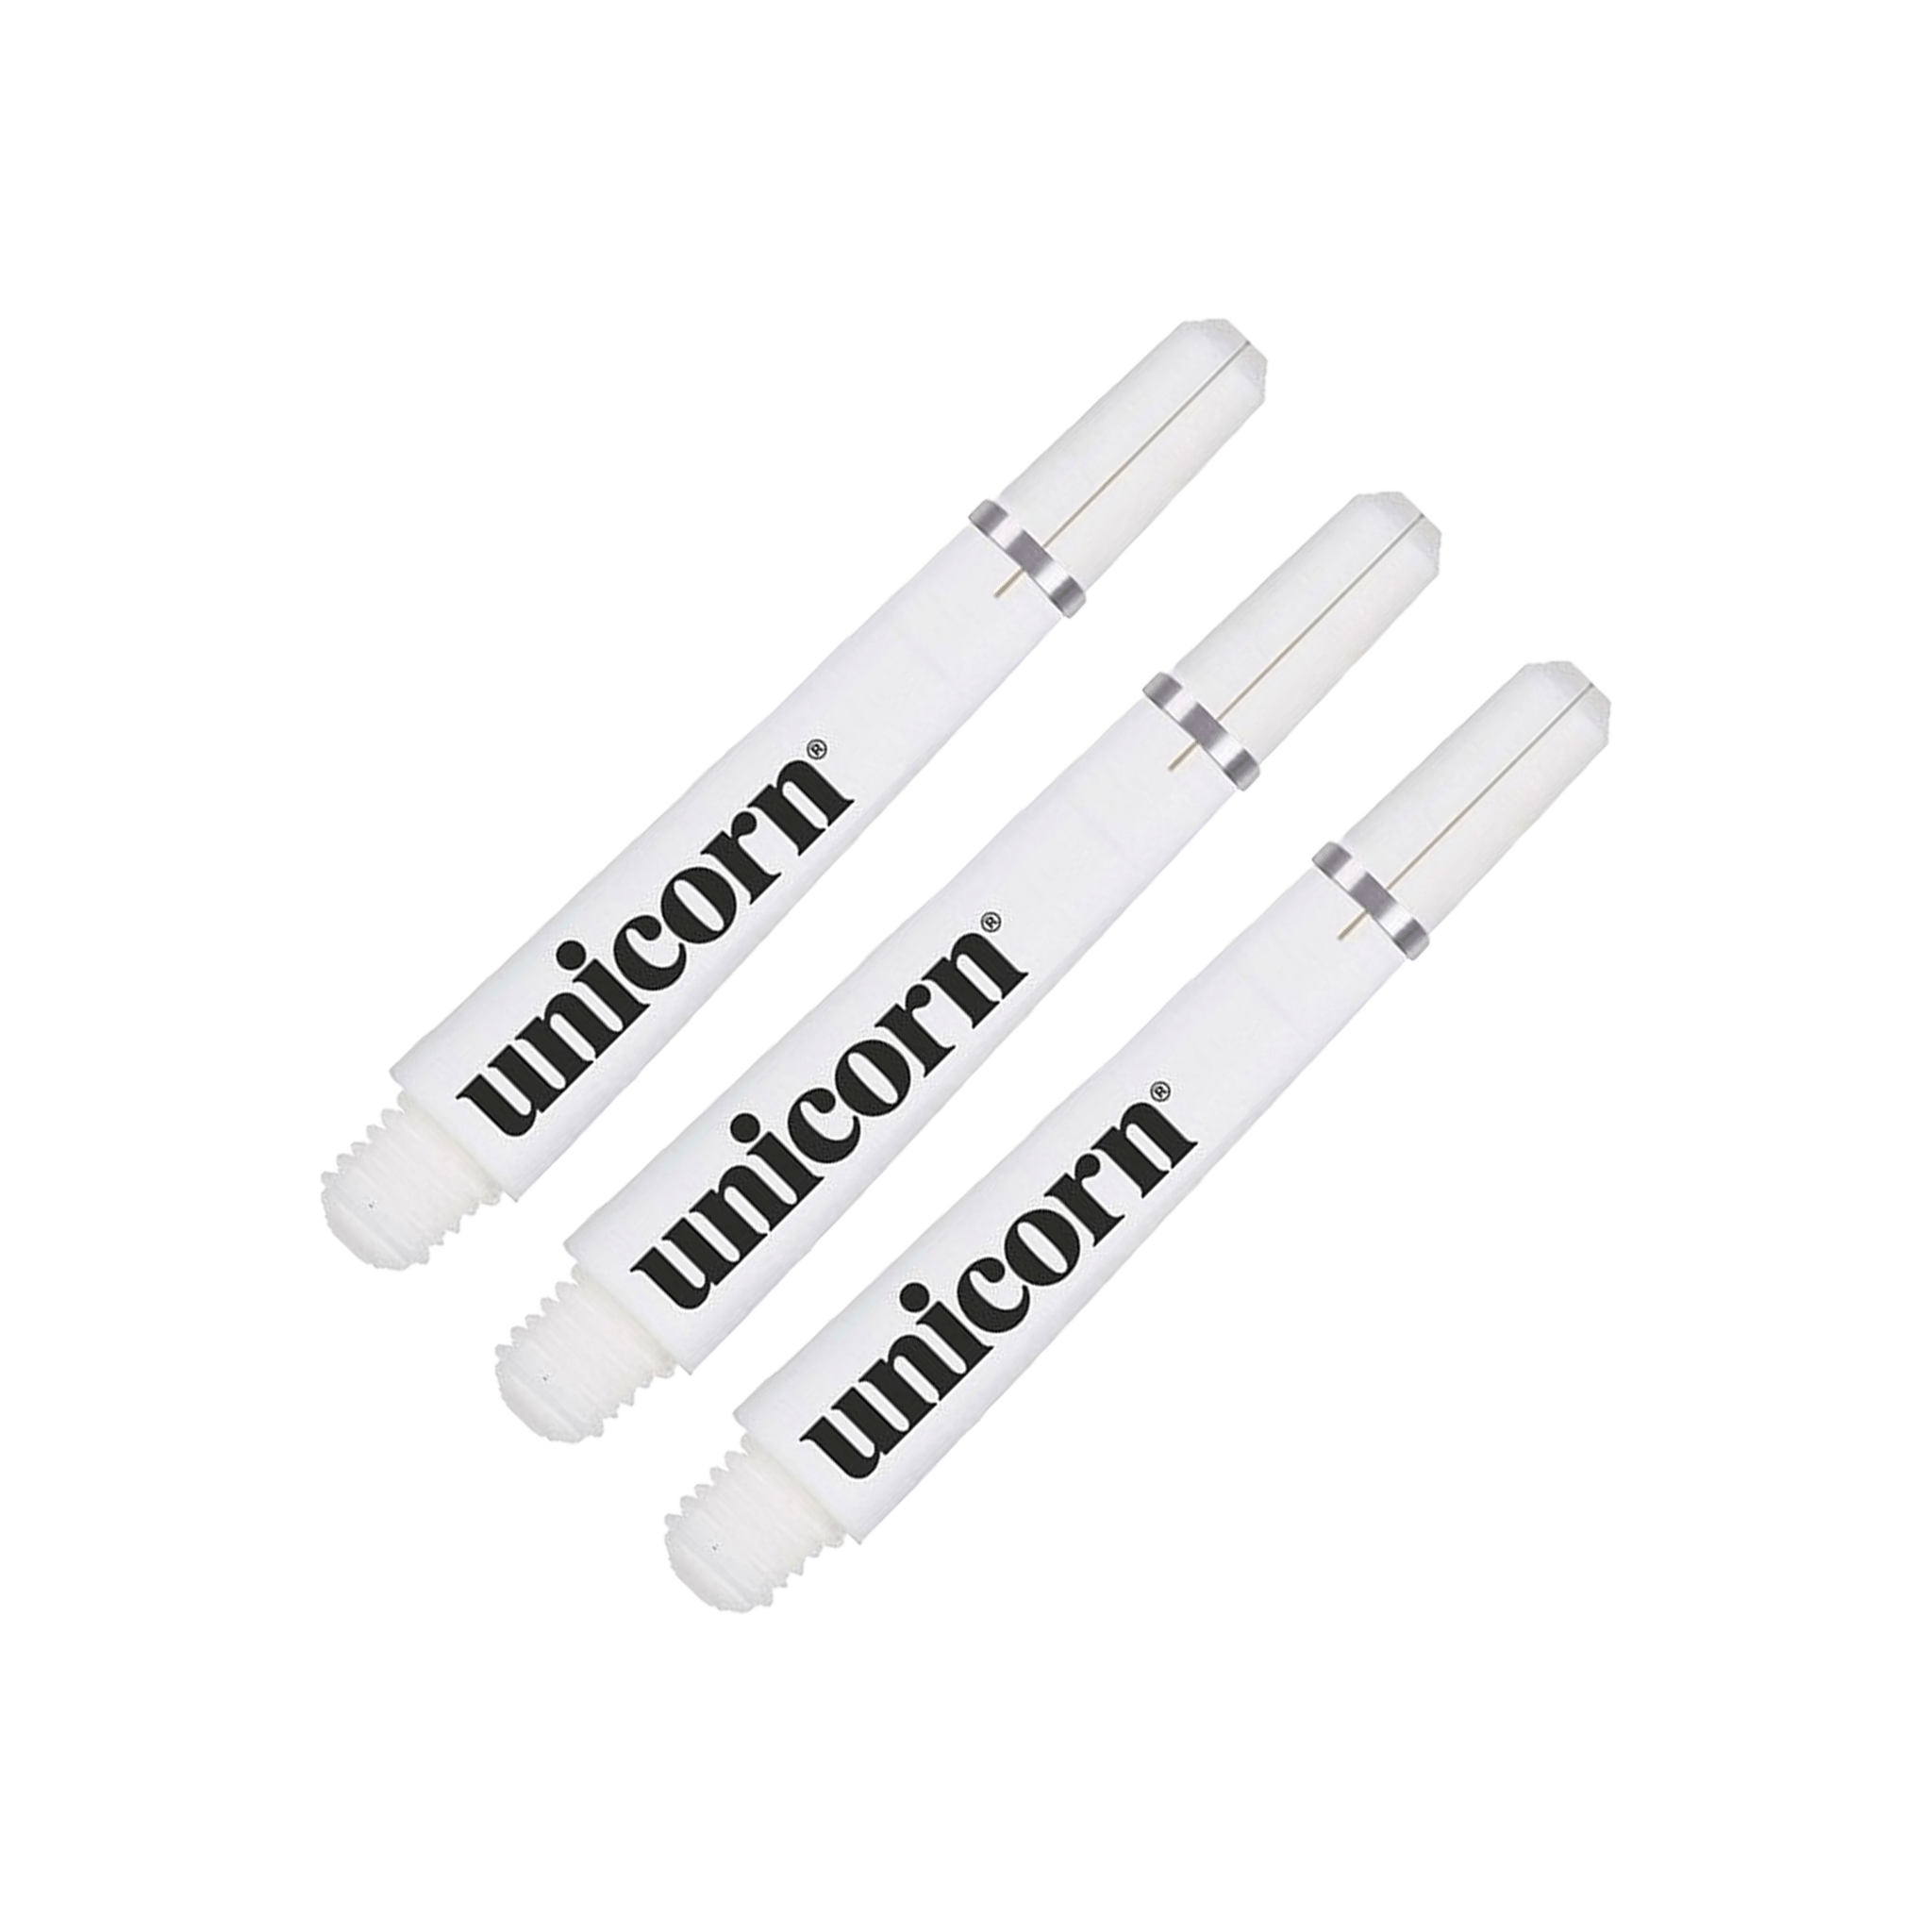 Unicorn Gripper 4 Polycarbonate Dart Shafts White / Short (35mm) Shafts